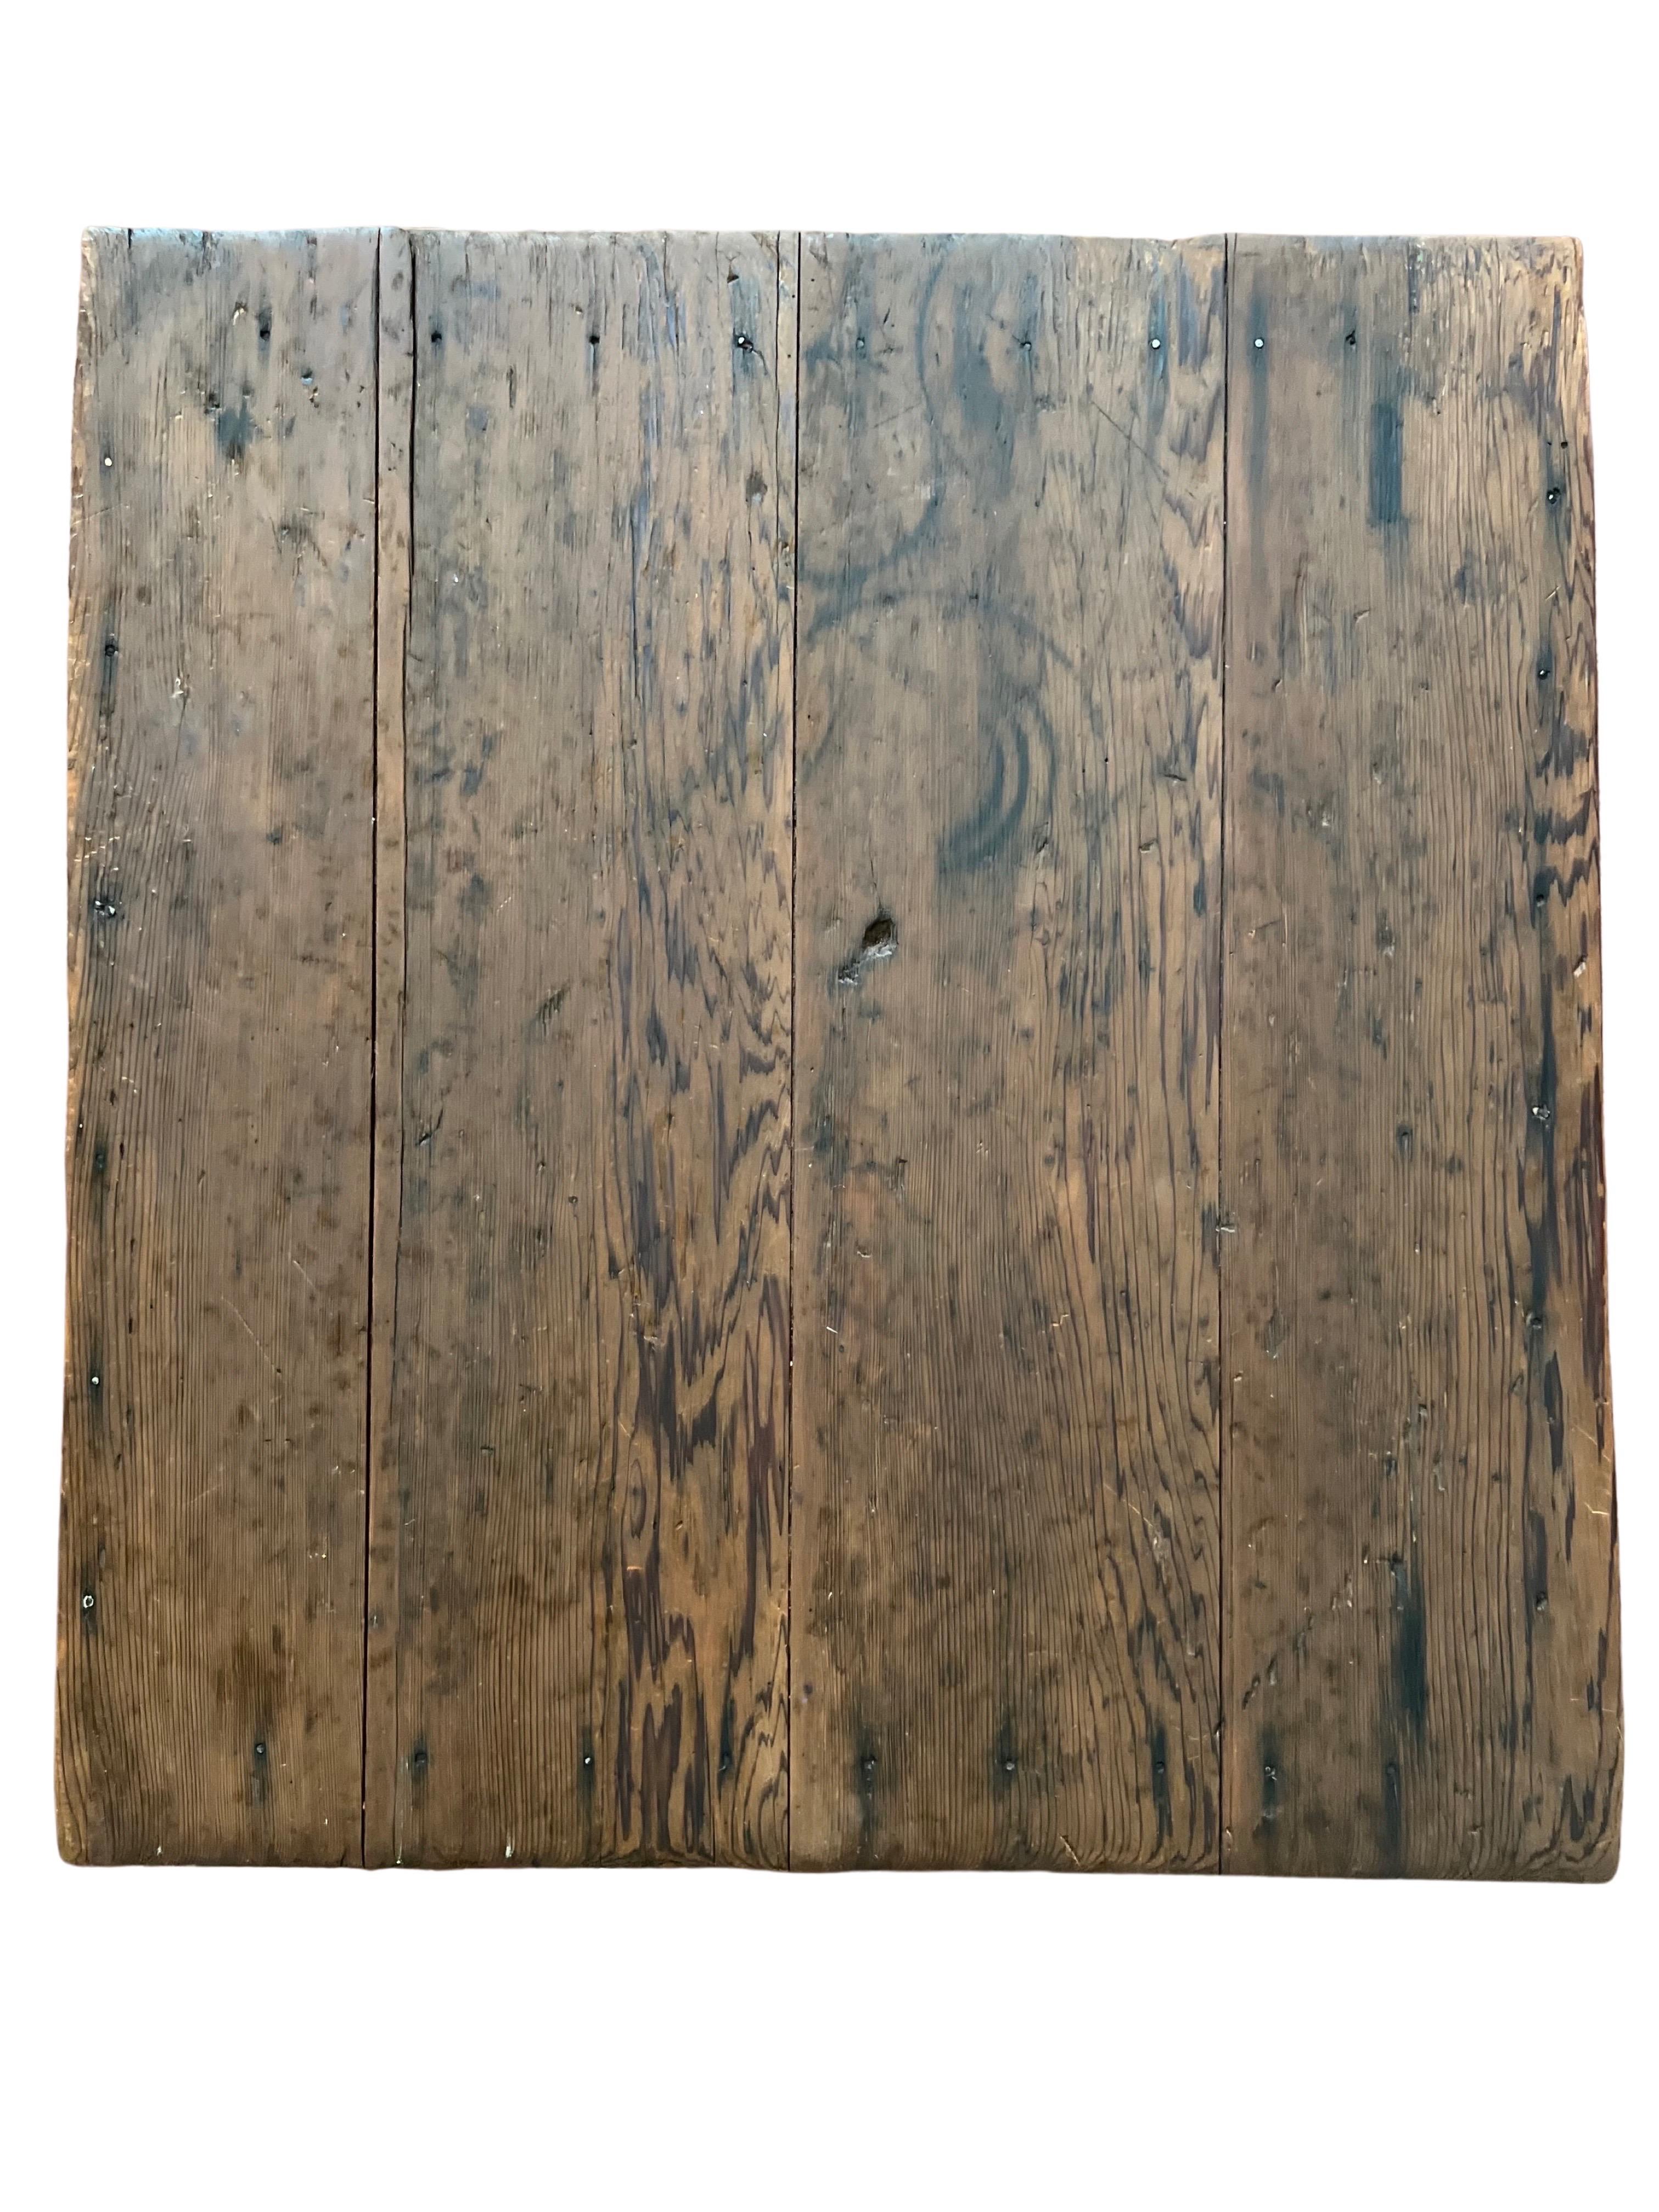 Poplar Antique Rustic Black Painted Farmhouse Harvest Work Table For Sale